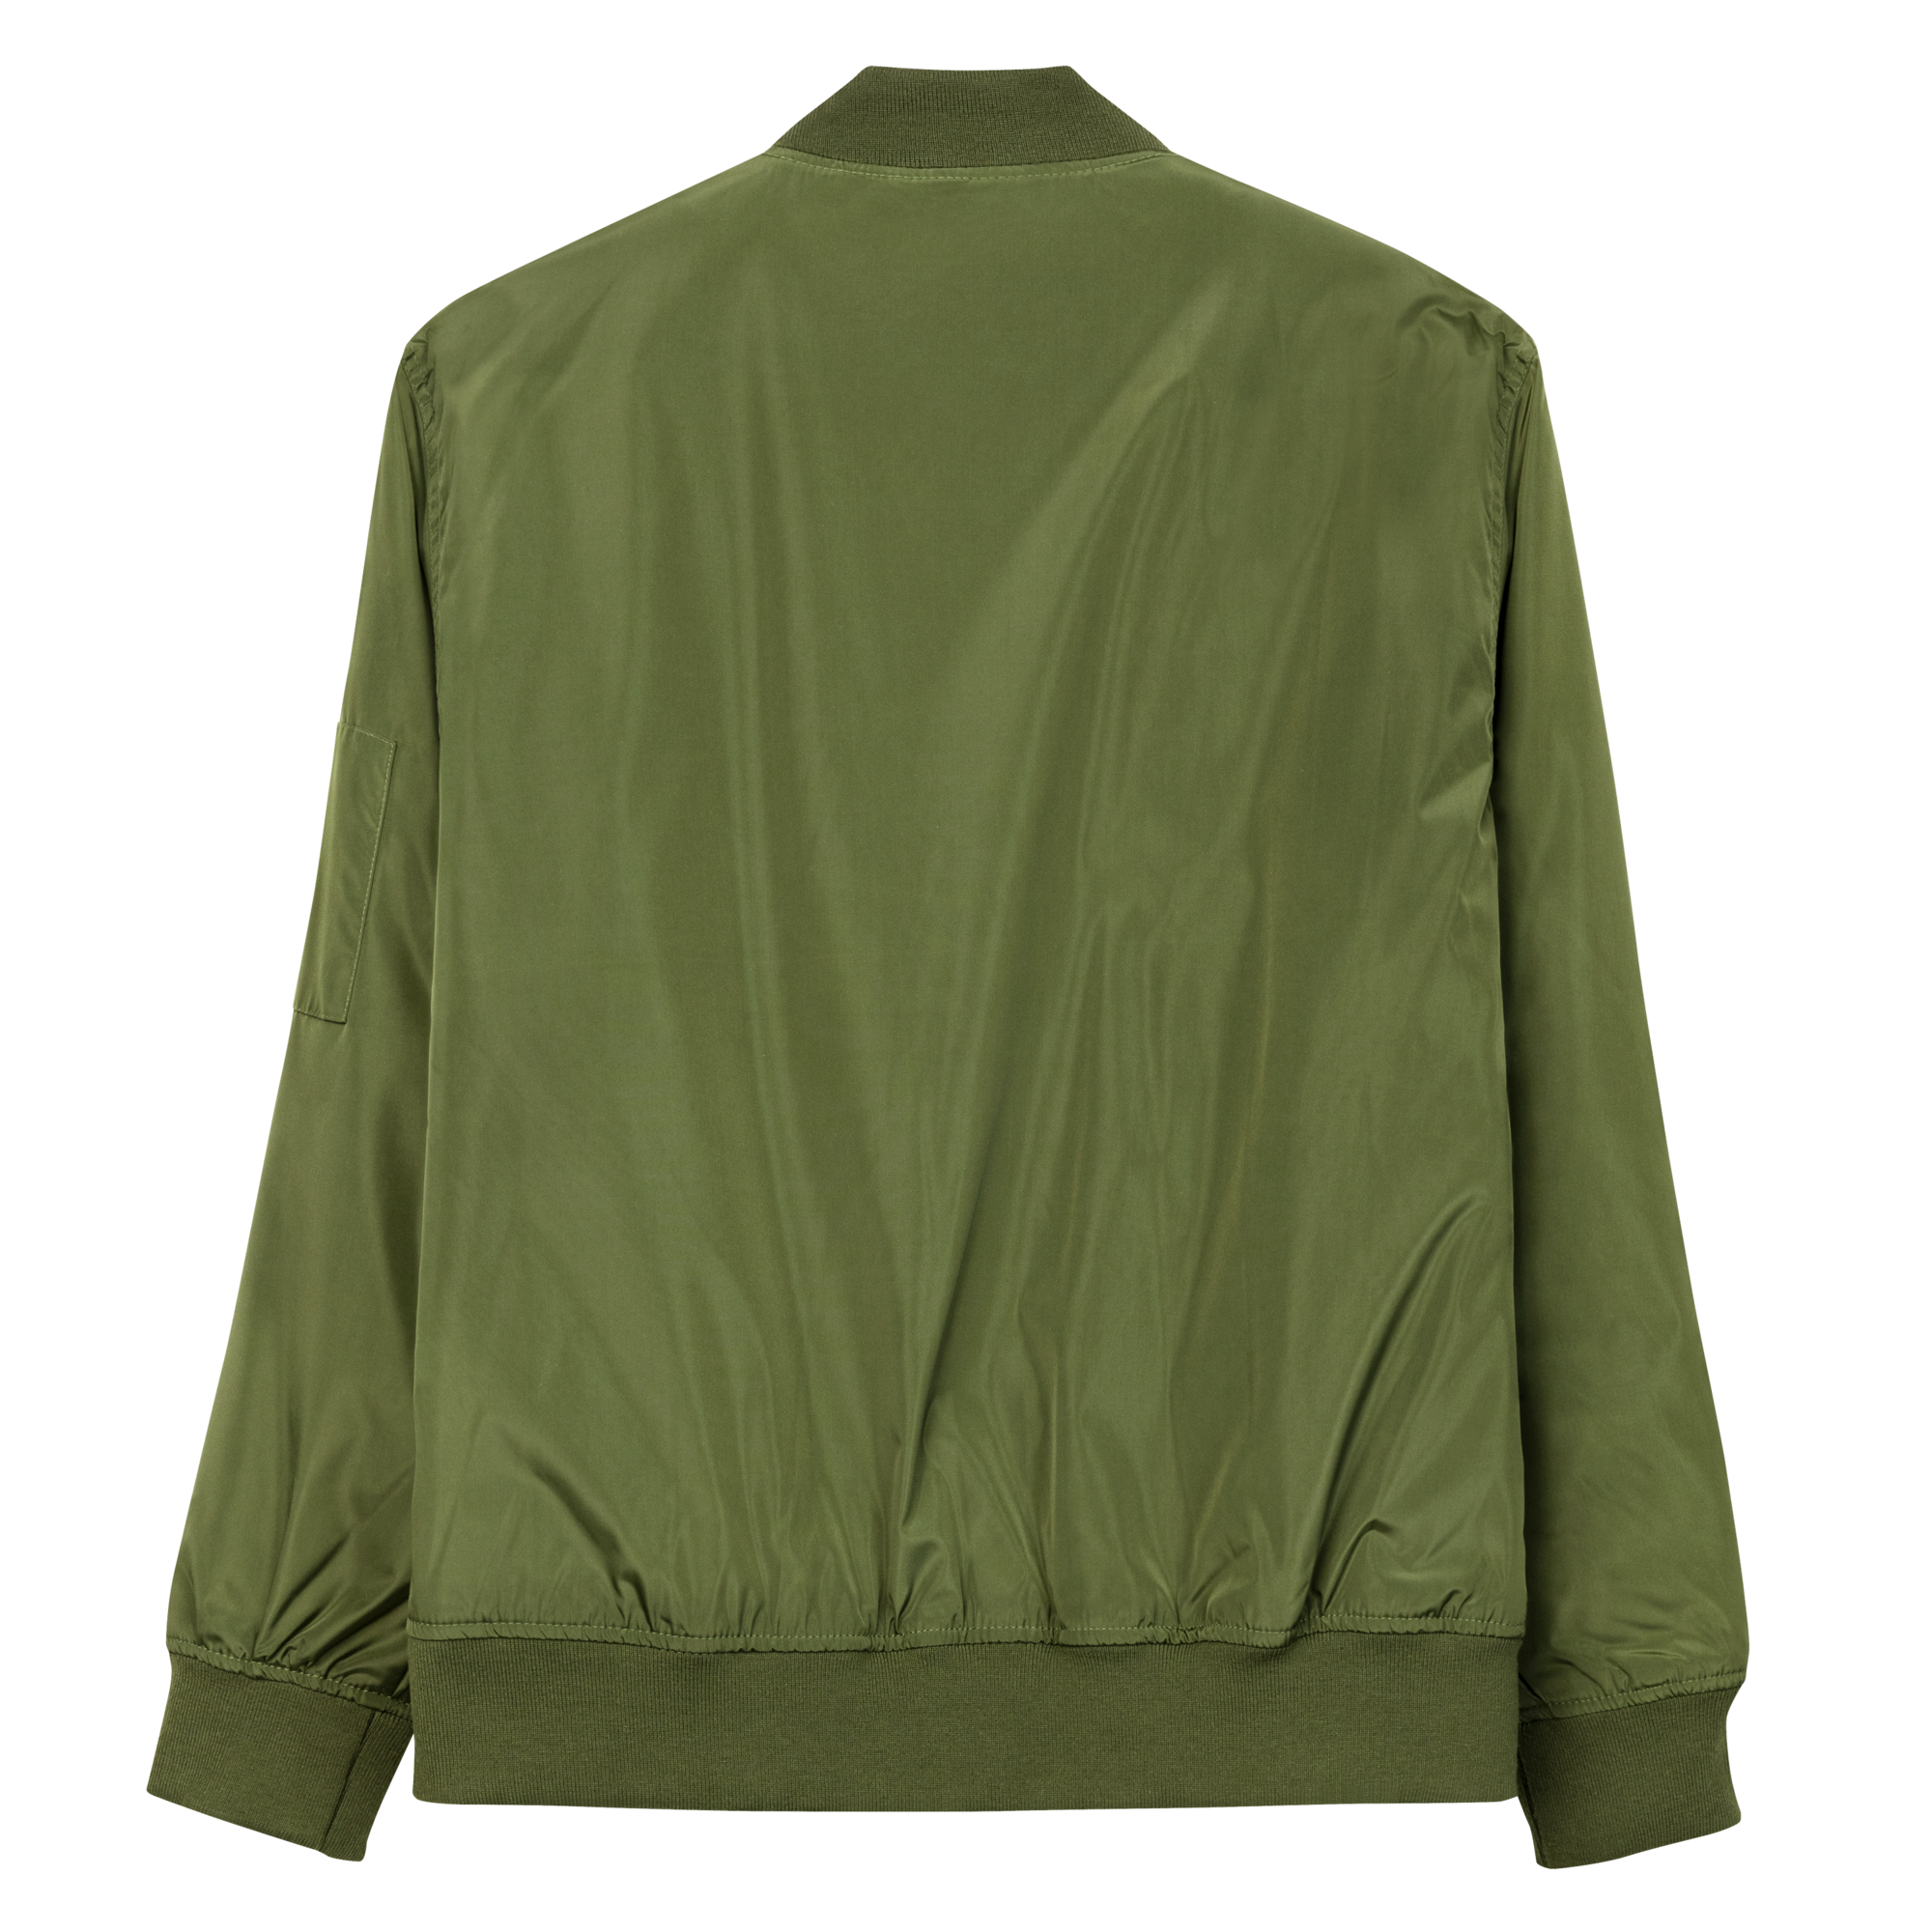 Bestaan Siësta oase MAFIA Gear "J*O*S*H" Premium Recycled Bomber Jacket – 26 Shirts